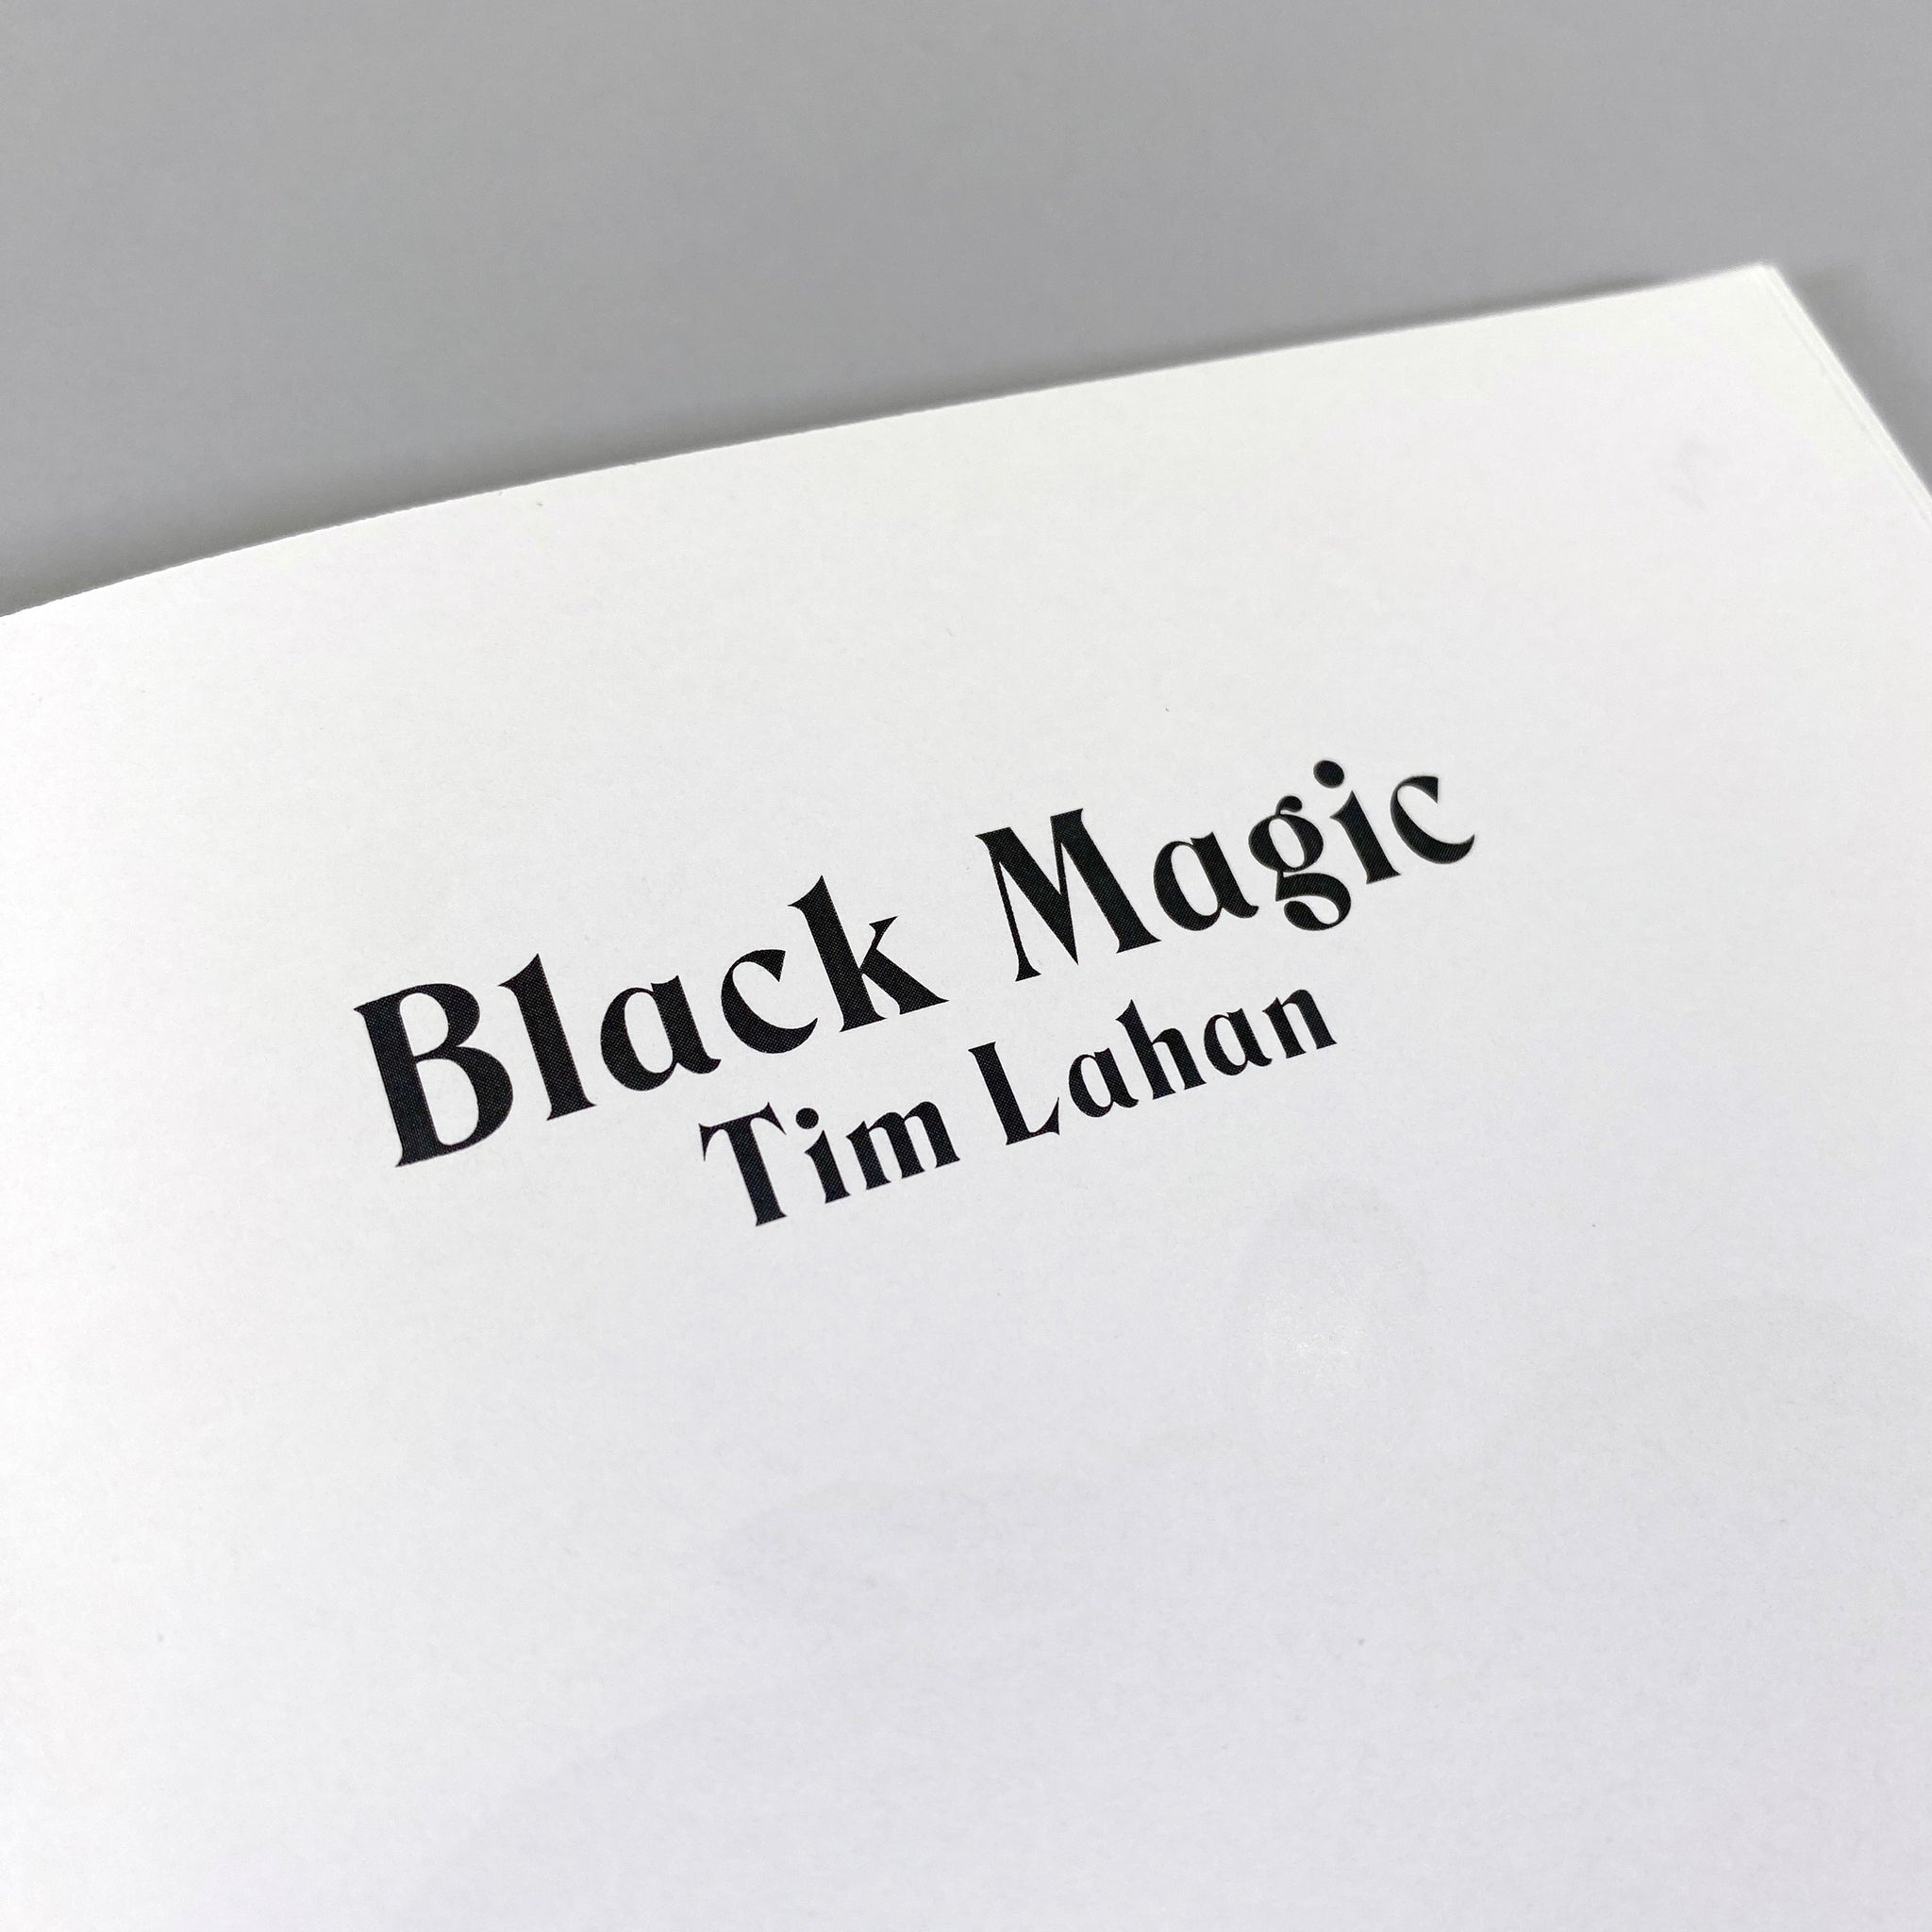 Black Magic / Tim Lahan